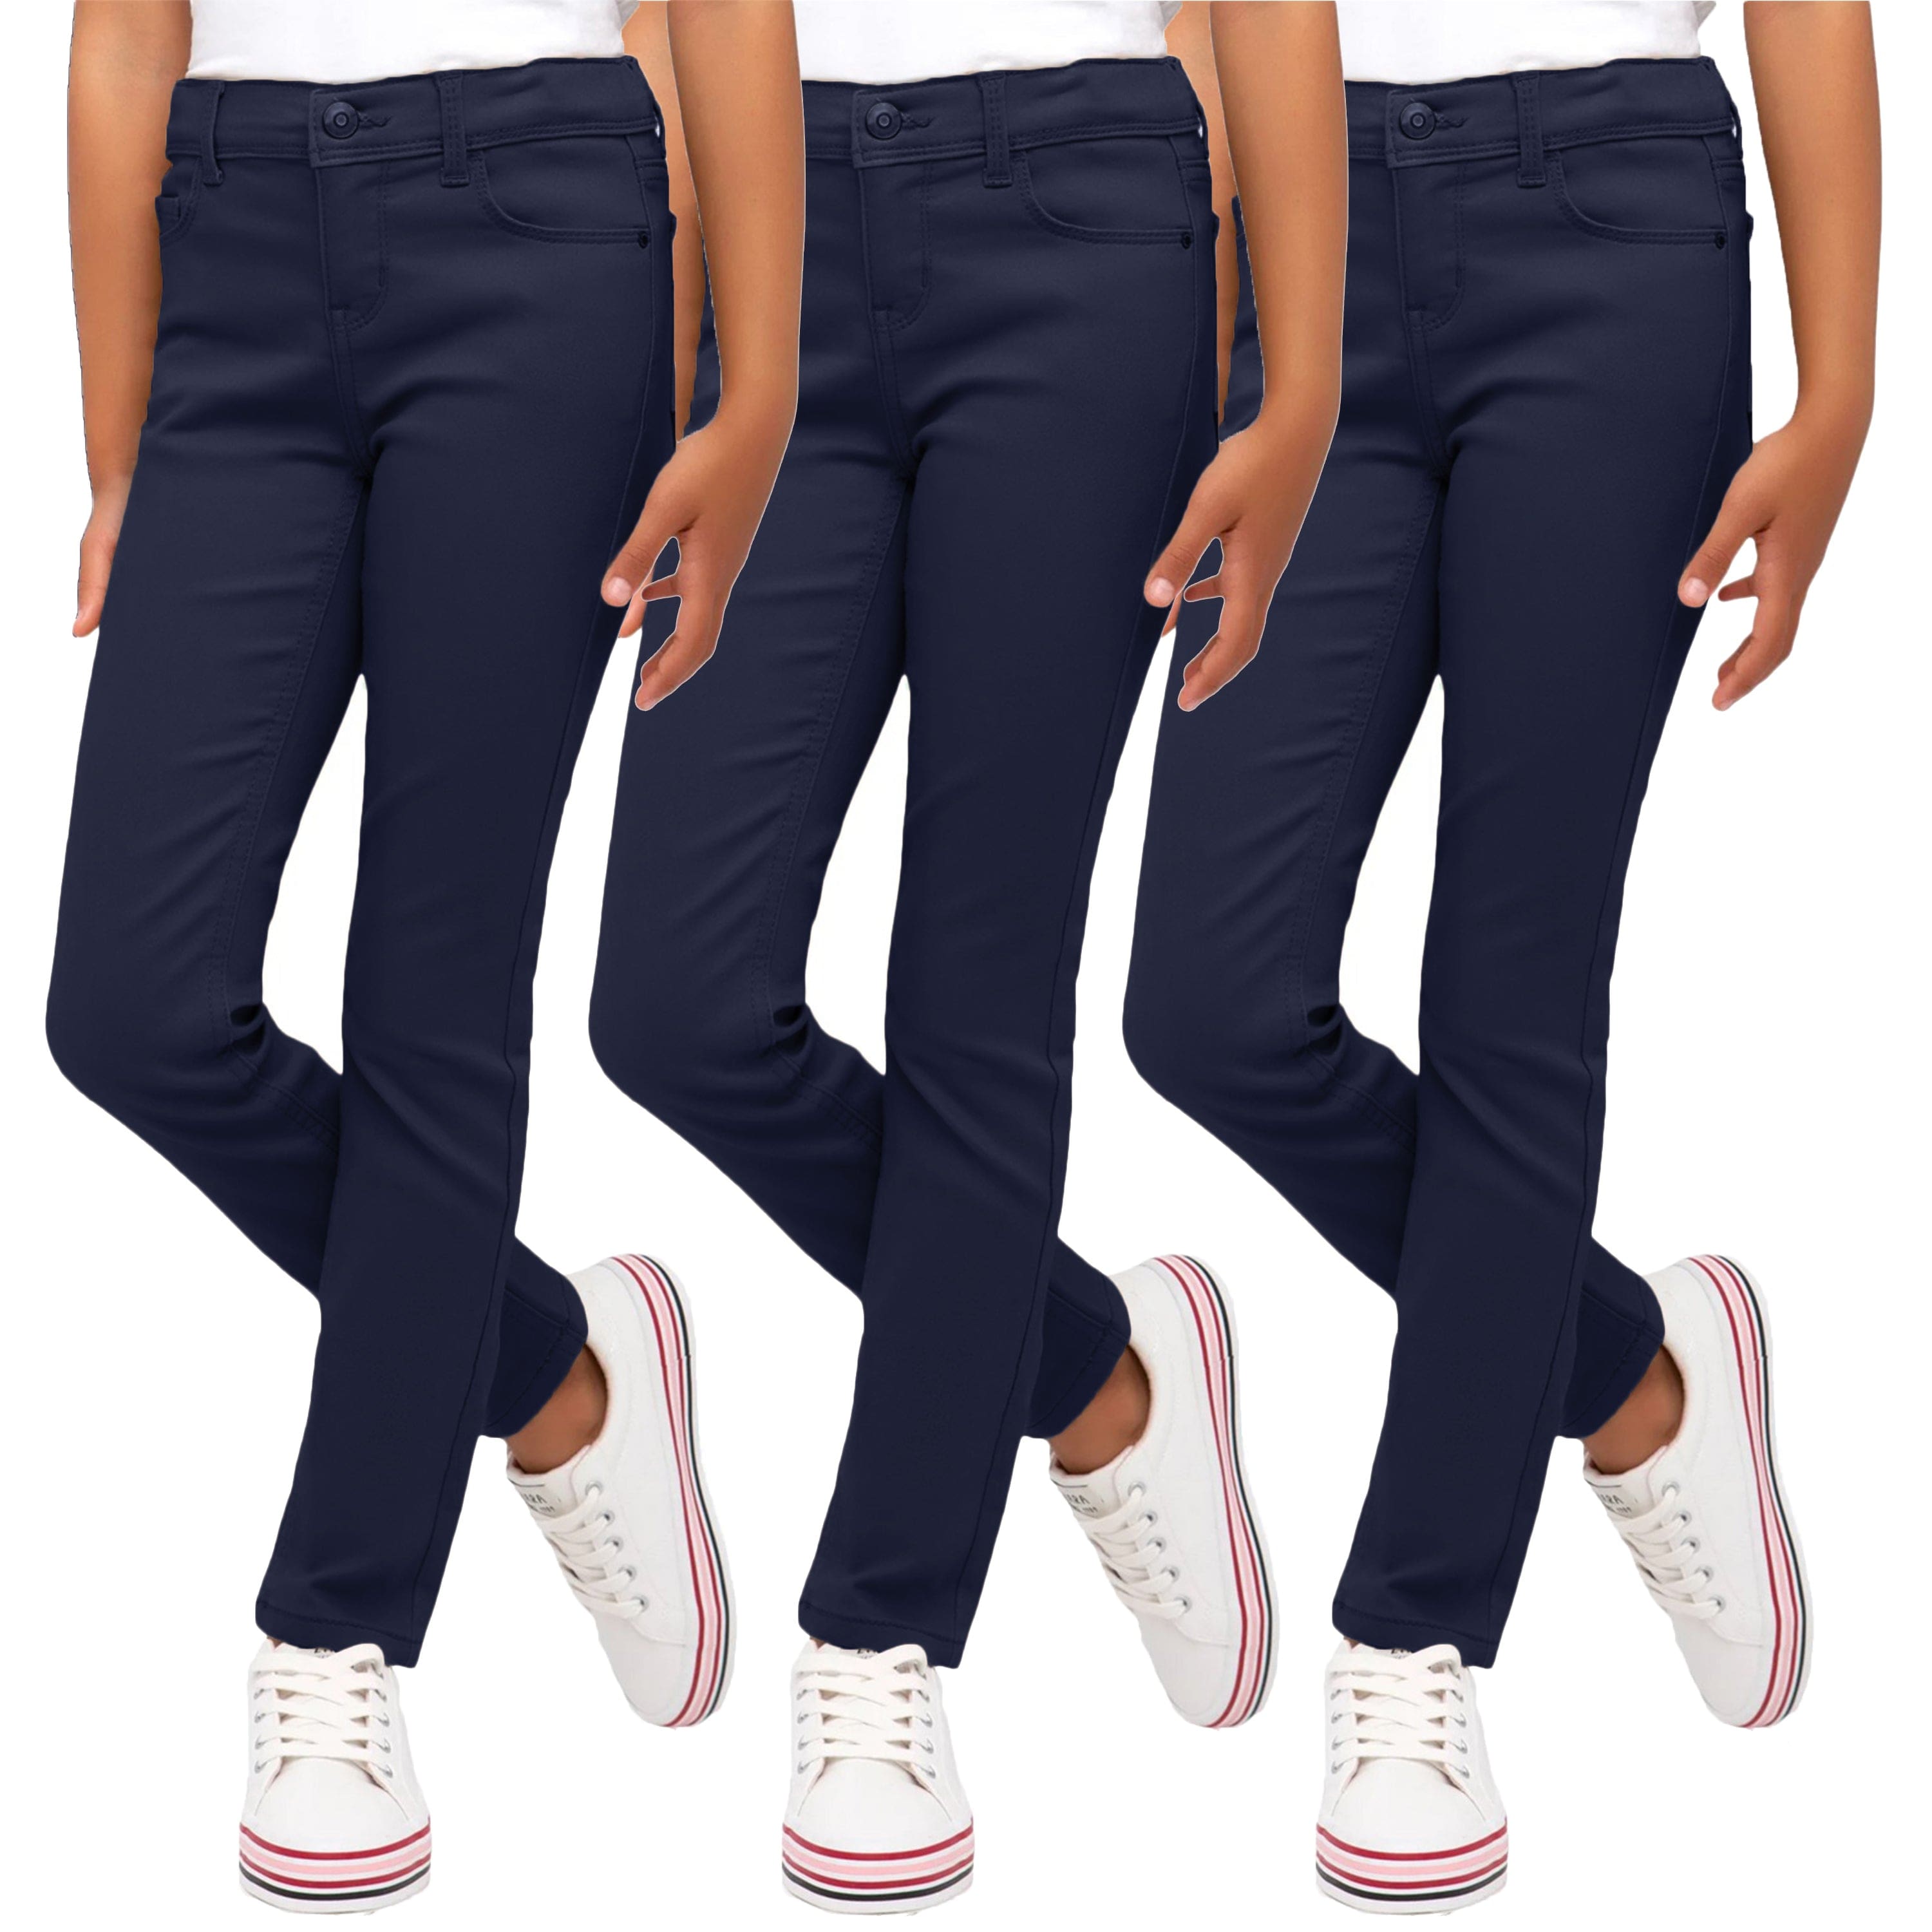 Stylish Girls Khaki School Uniform Pants - Size 8